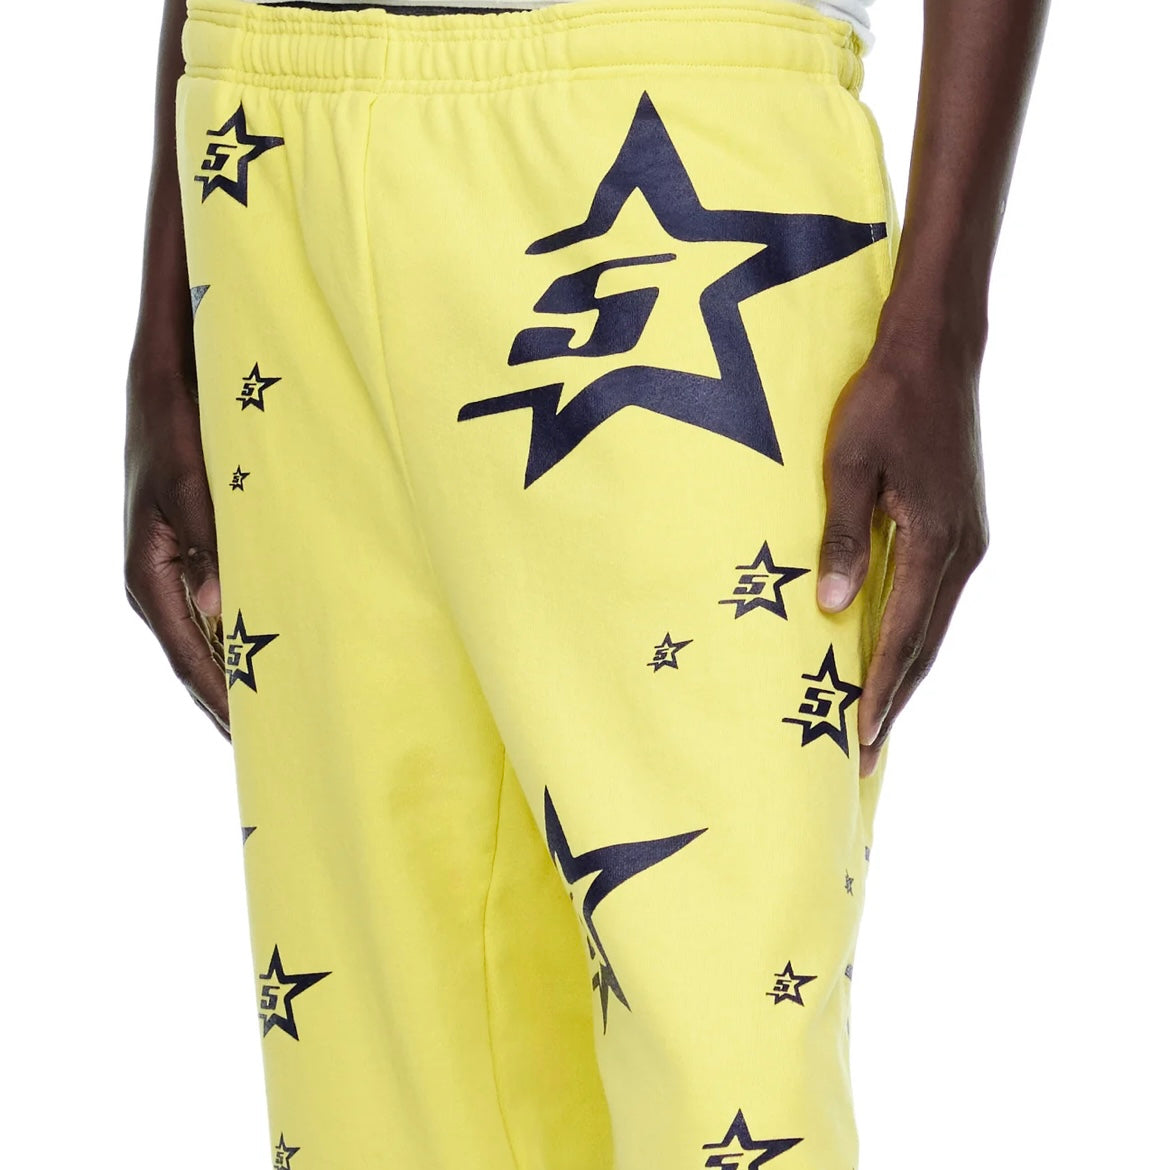 Sp5der Yellow 5Star Sweatpants On Body 2